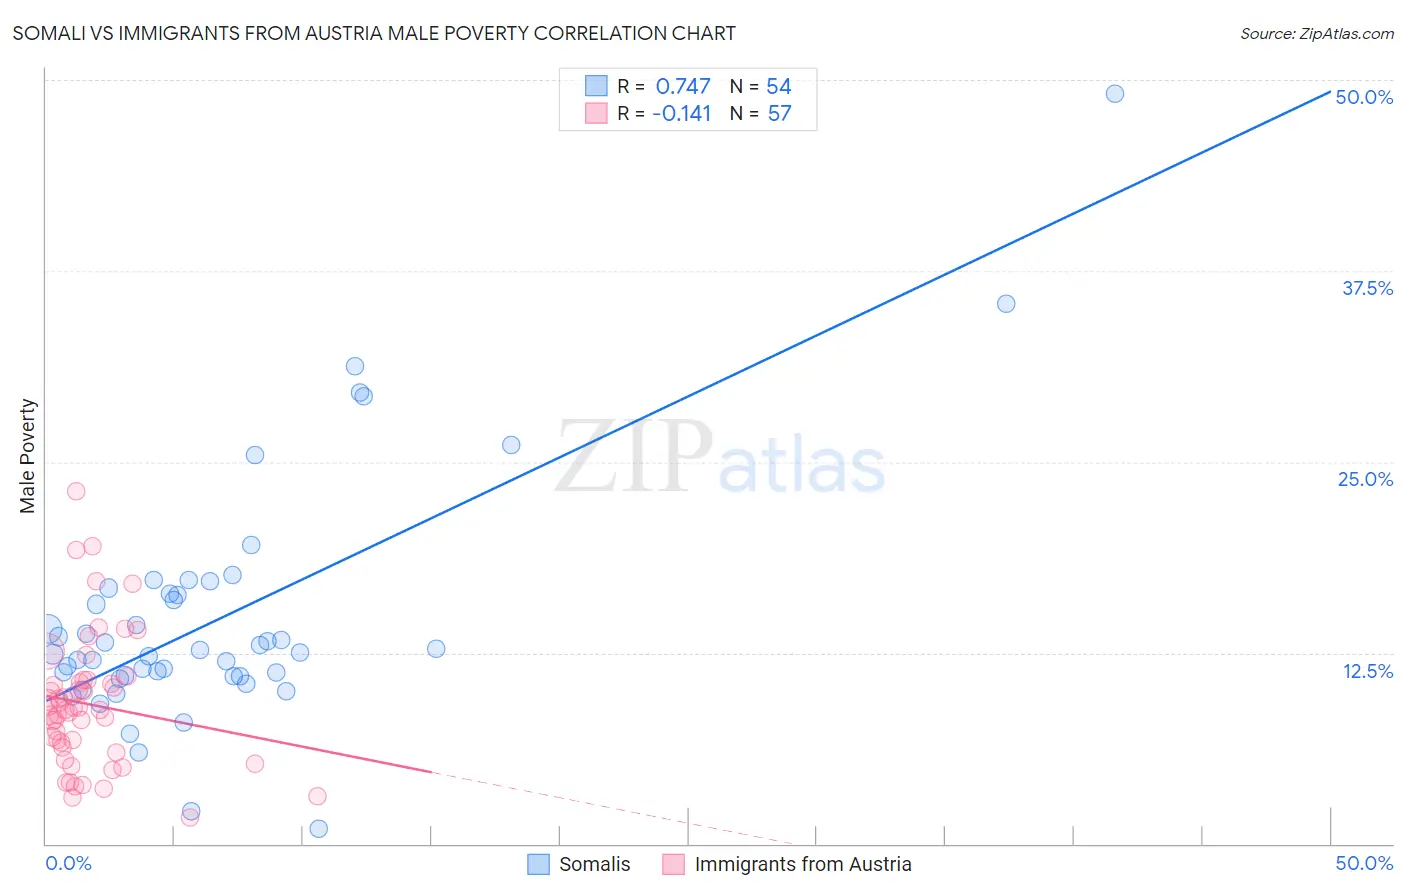 Somali vs Immigrants from Austria Male Poverty